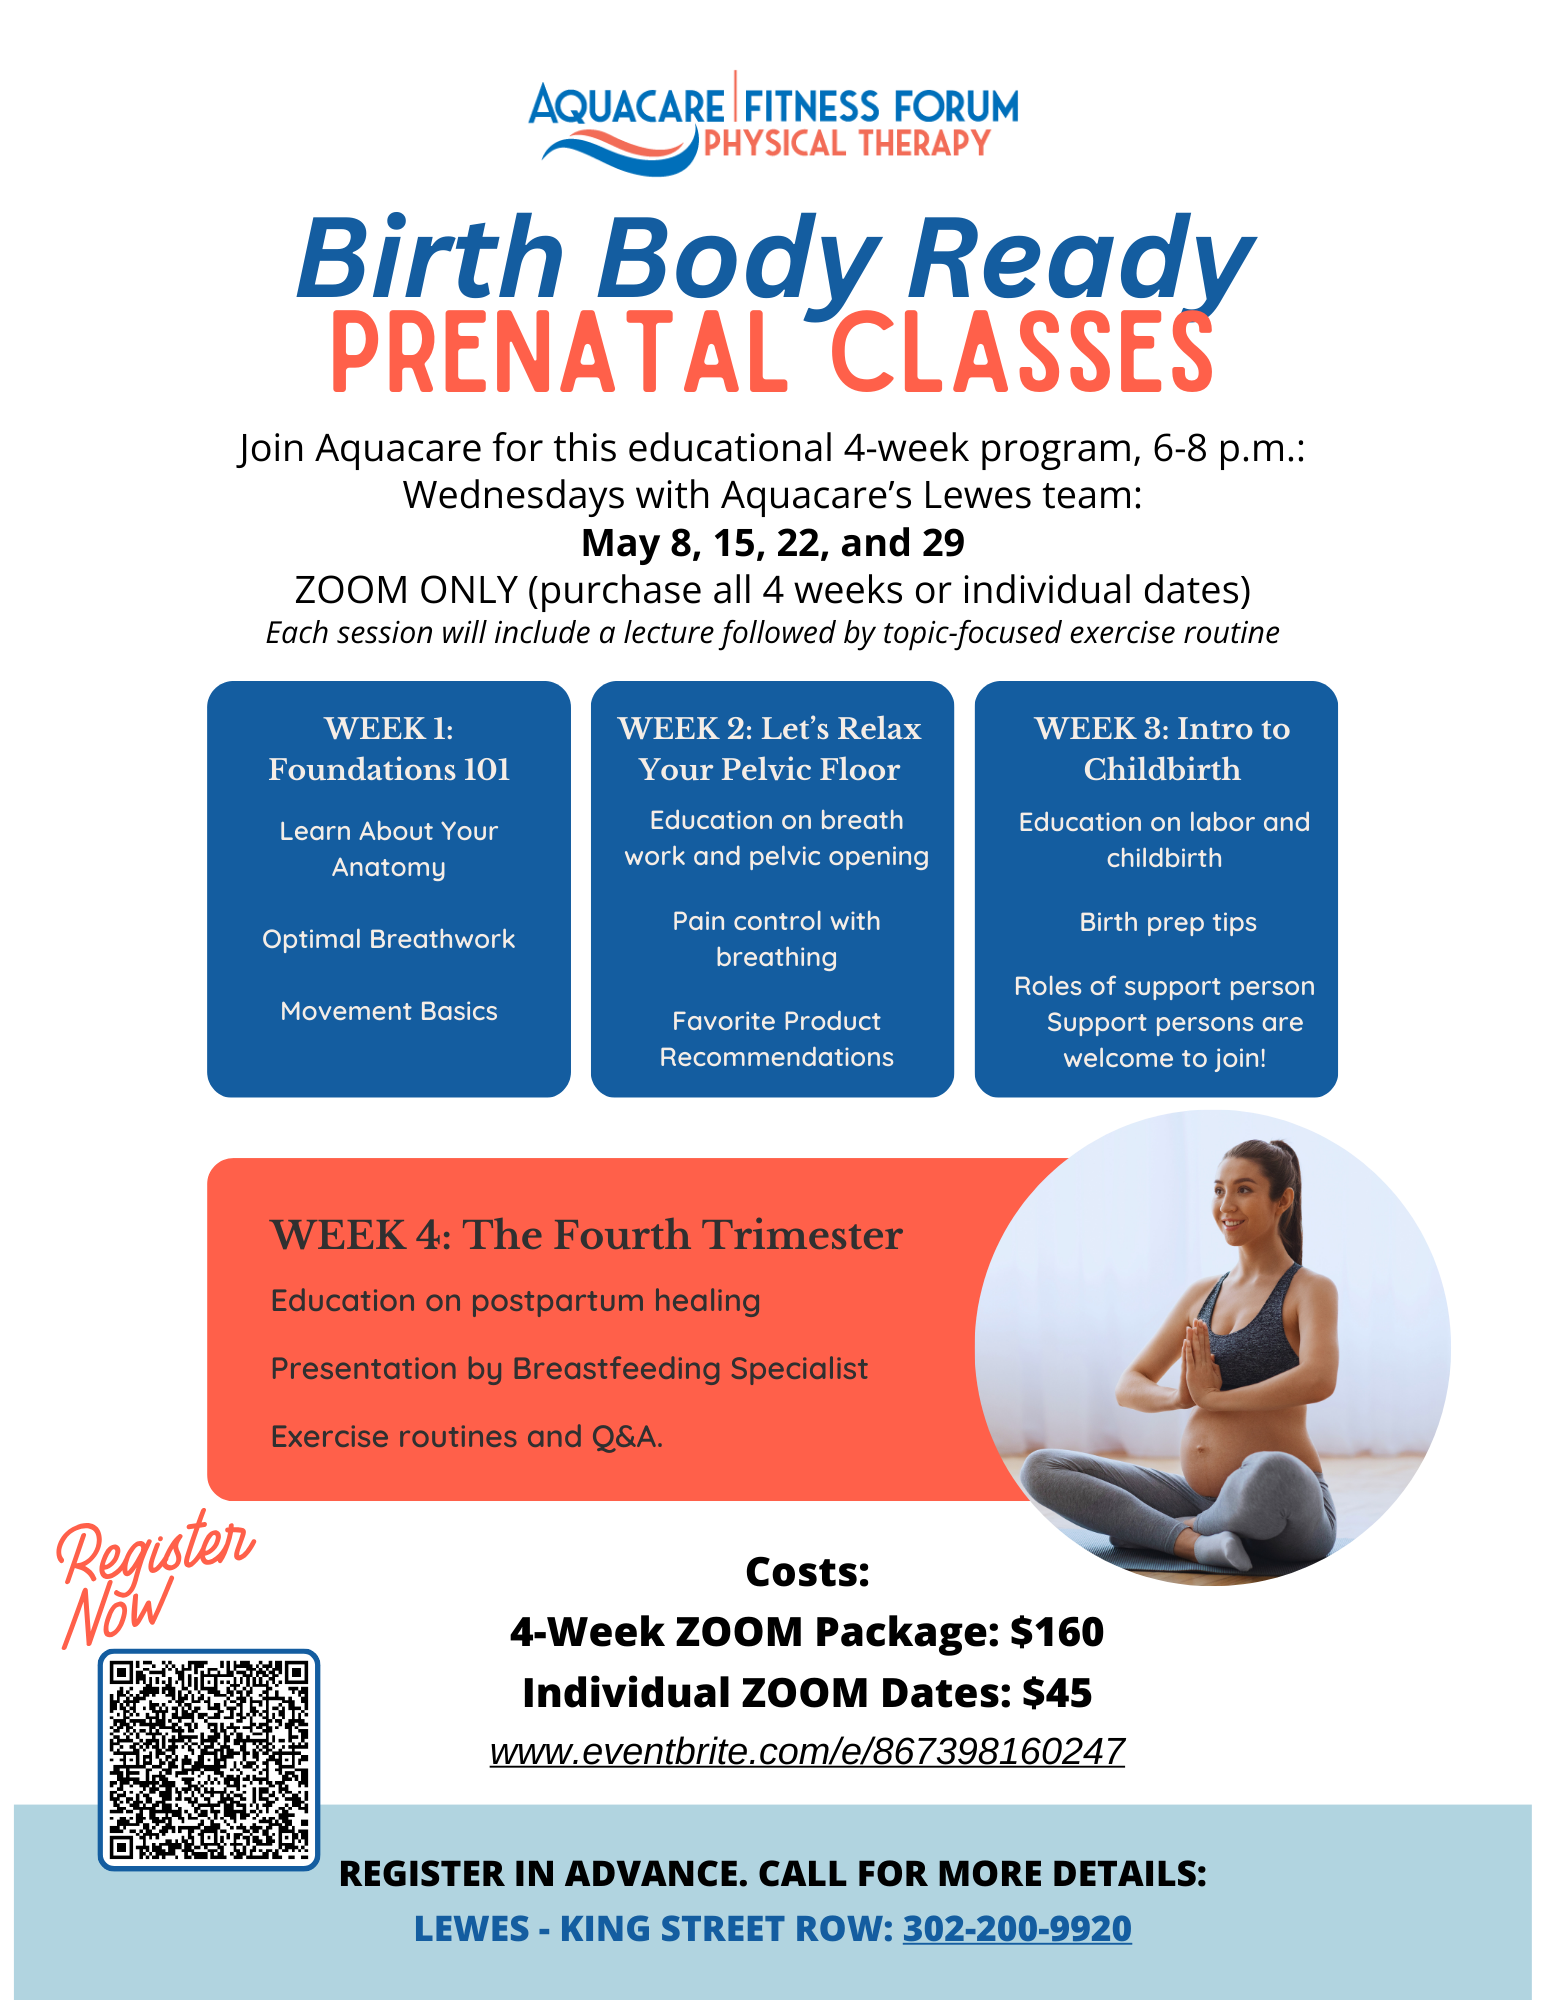 a flyer for the birth body ready prenatal classes